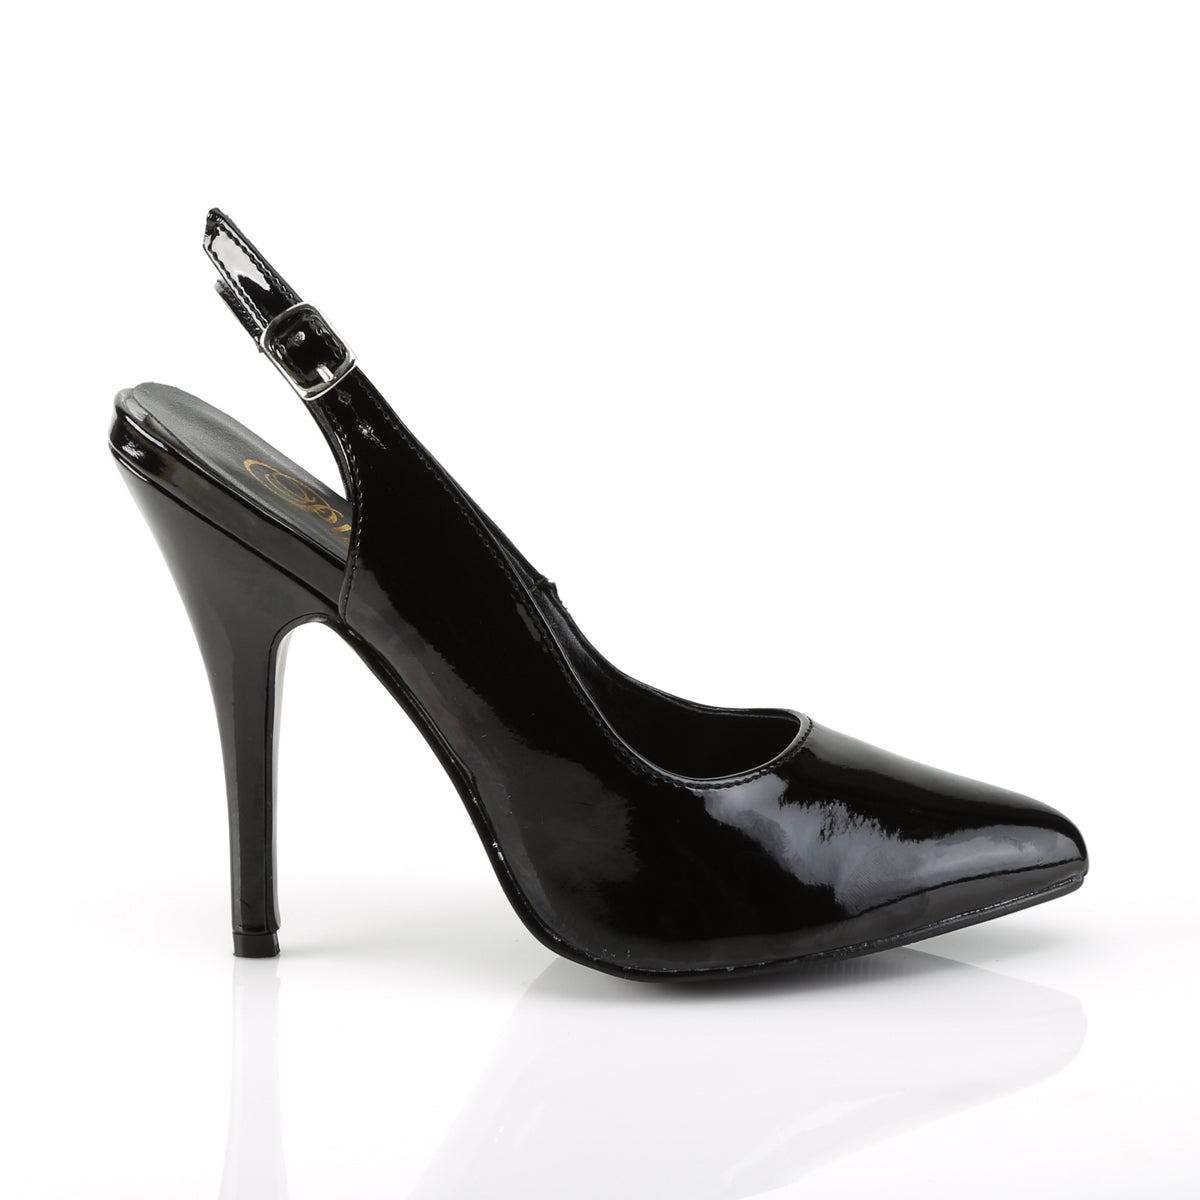 SEDUCE-317 Pleaser Shoe 5" Heel Black Patent Fetish Footwear-Pleaser- Sexy Shoes Fetish Heels